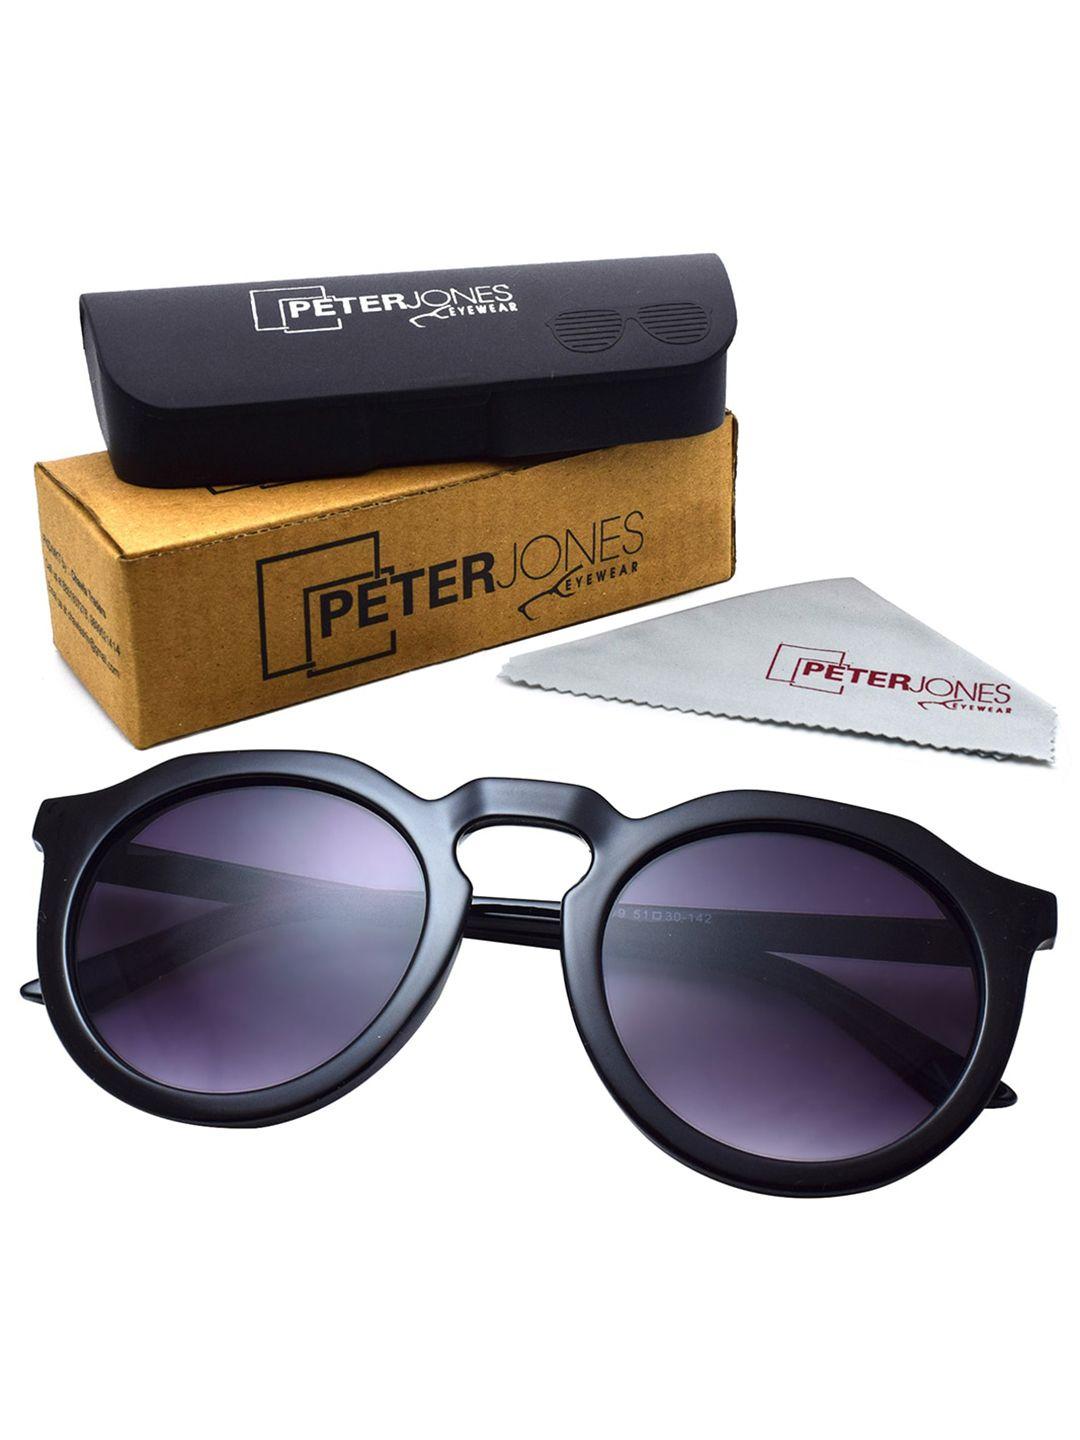 peter jones eyewear unisex round sunglasses with uv protected lens-3319b_s